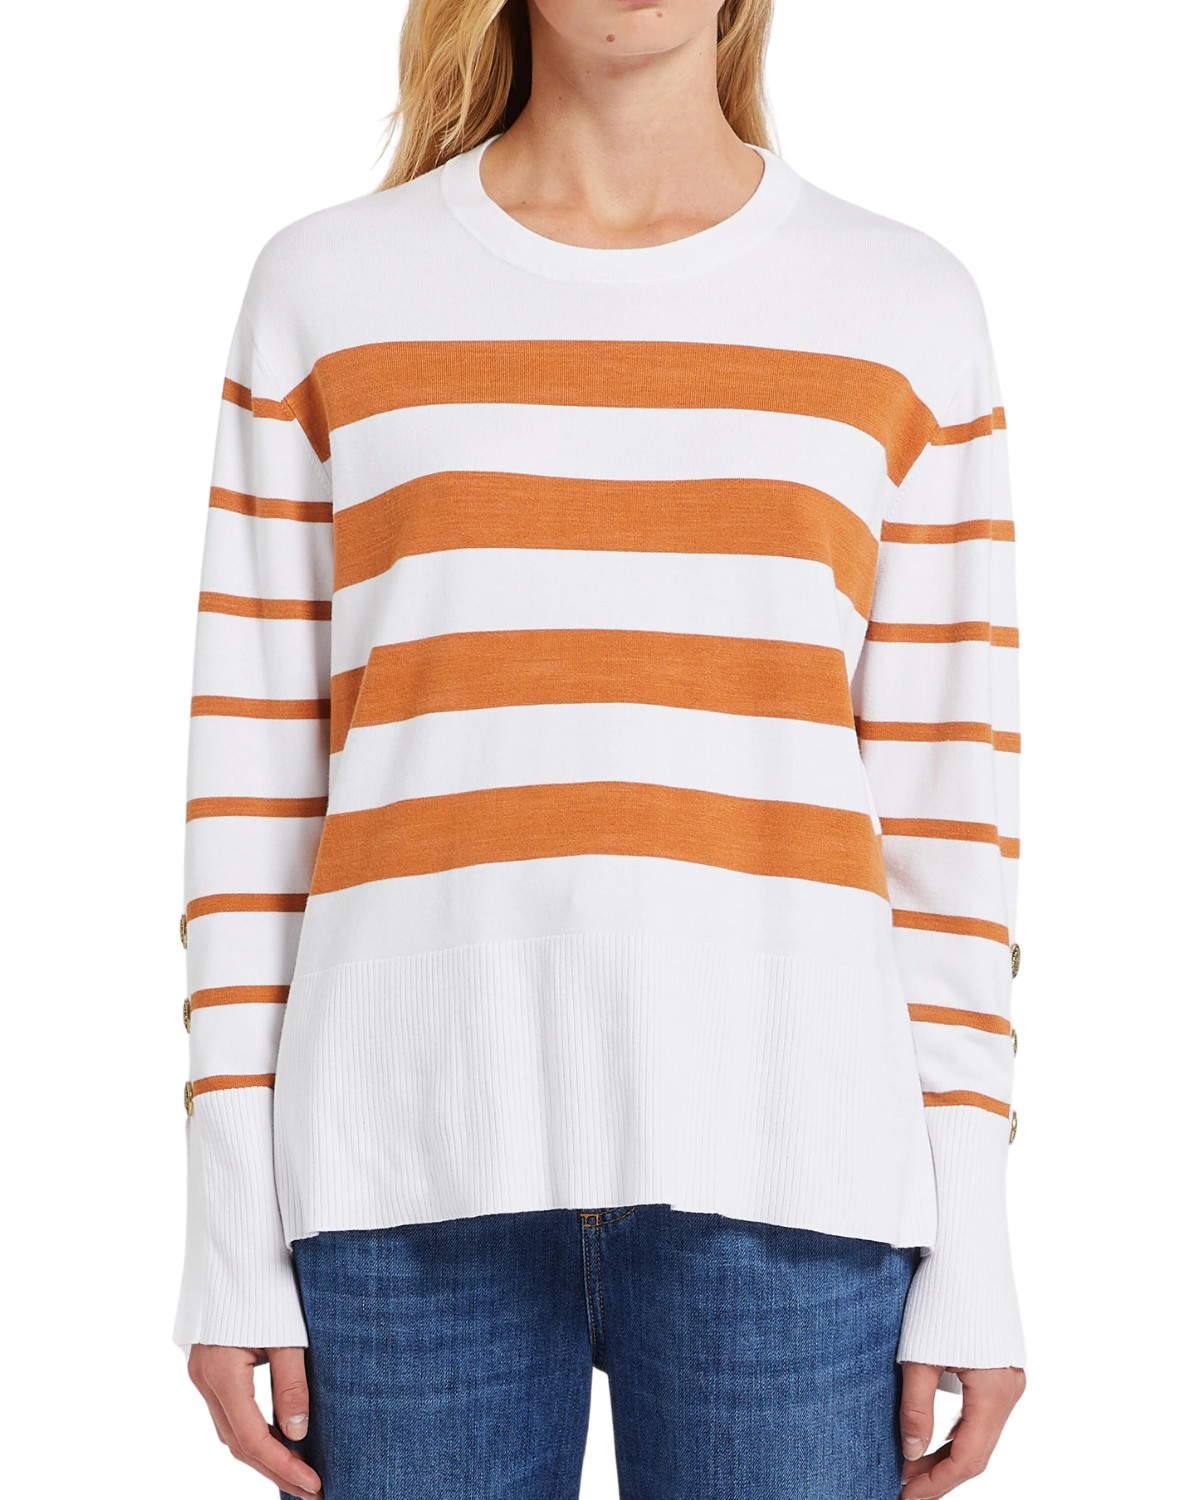 Annita Long Sleeve Cotton Sweater (White/Orange)